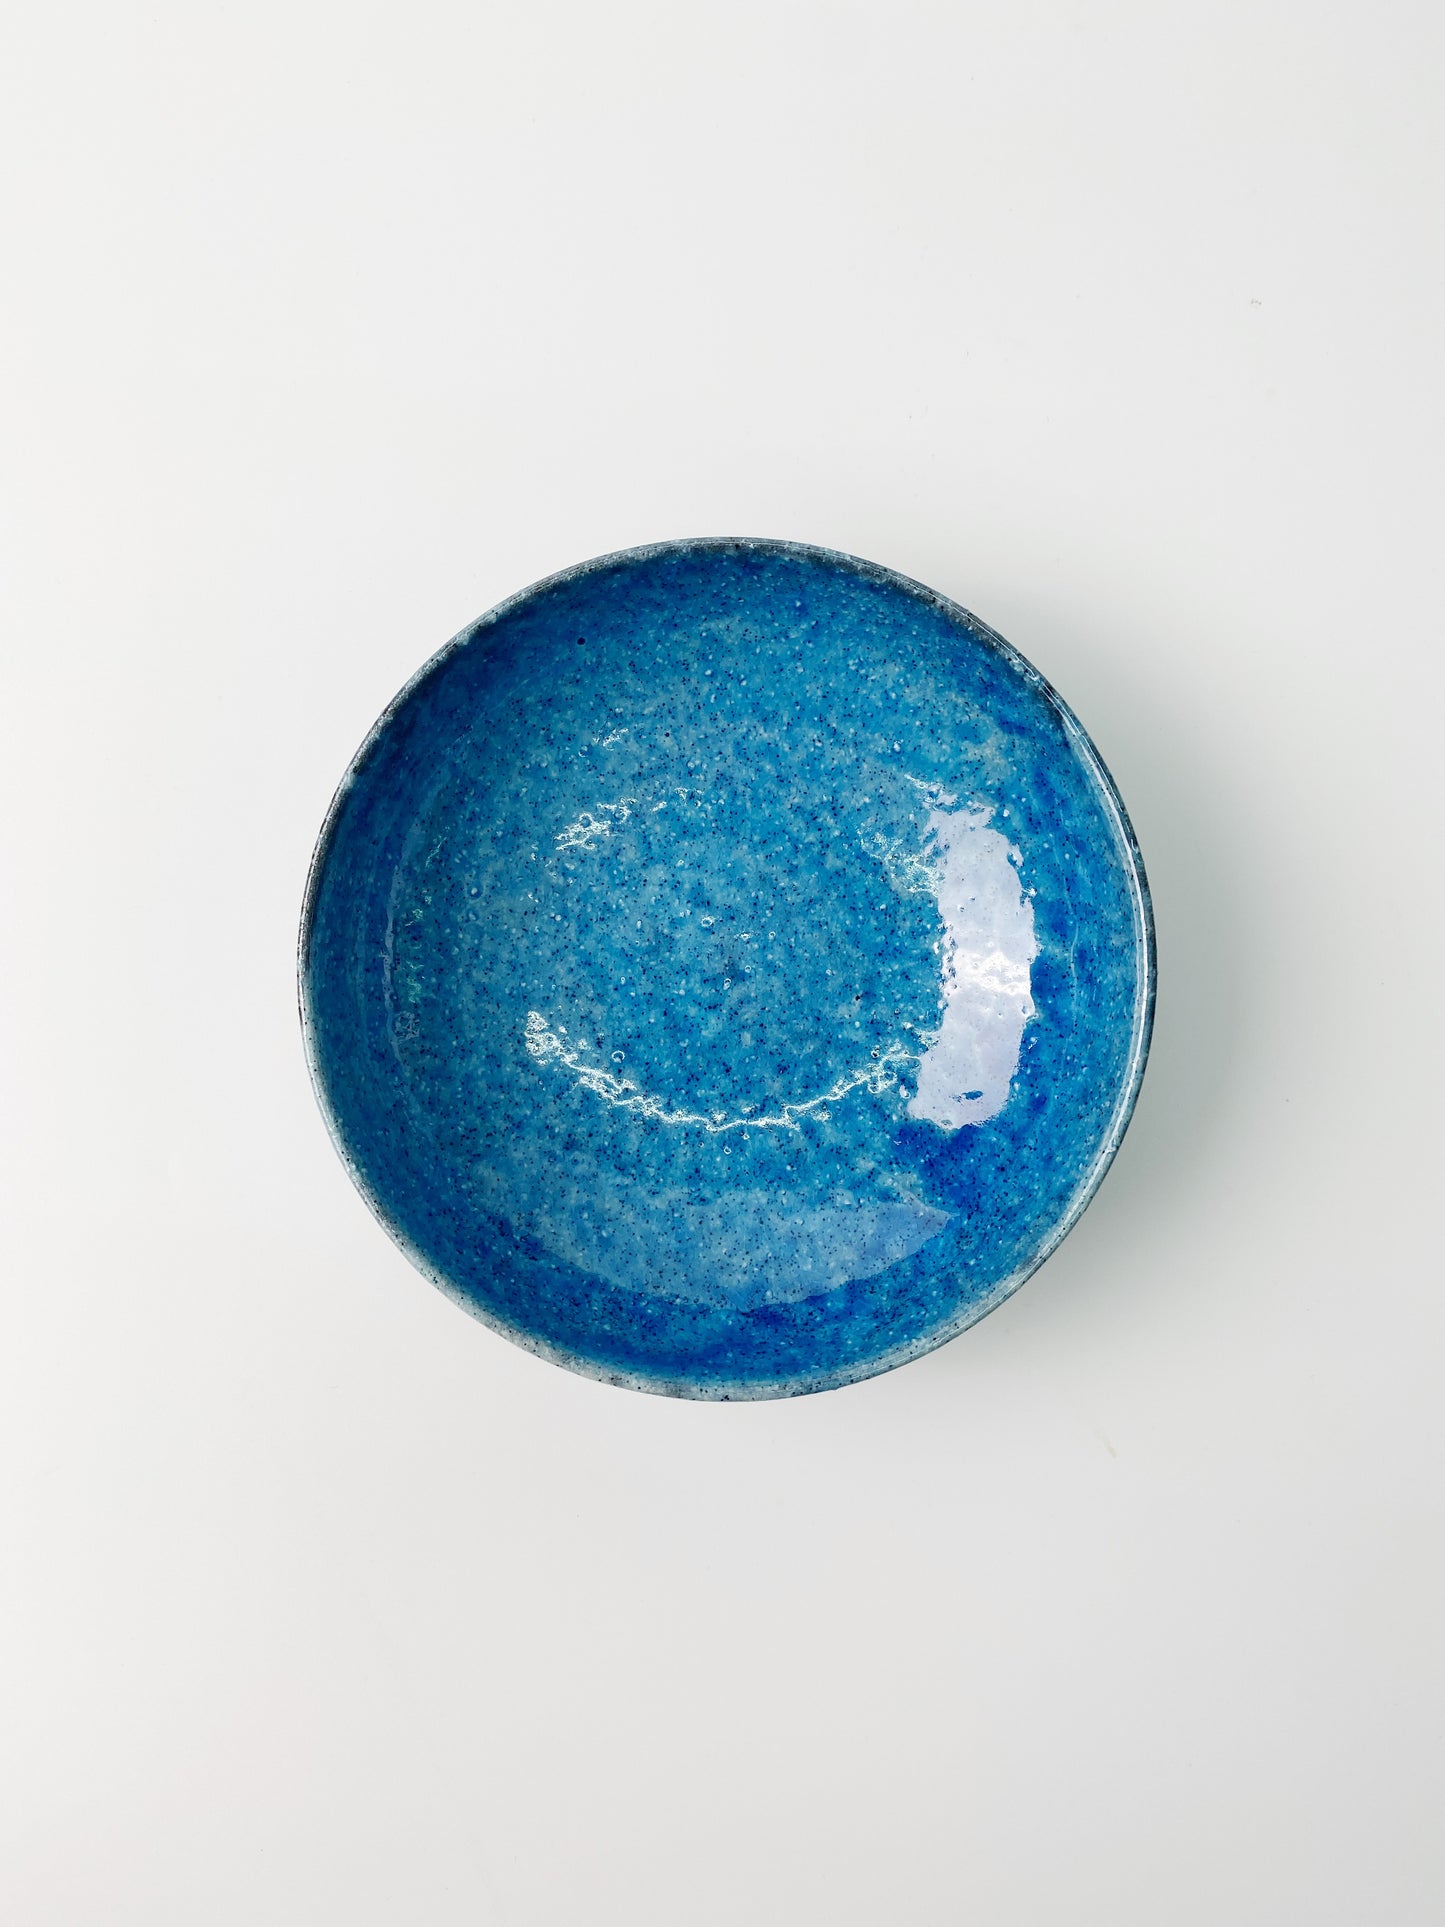 日本製美濃燒 高貴深藍色碗盤 | Japanese Mino Ware Noble Dark Blue Ceramic Bowl